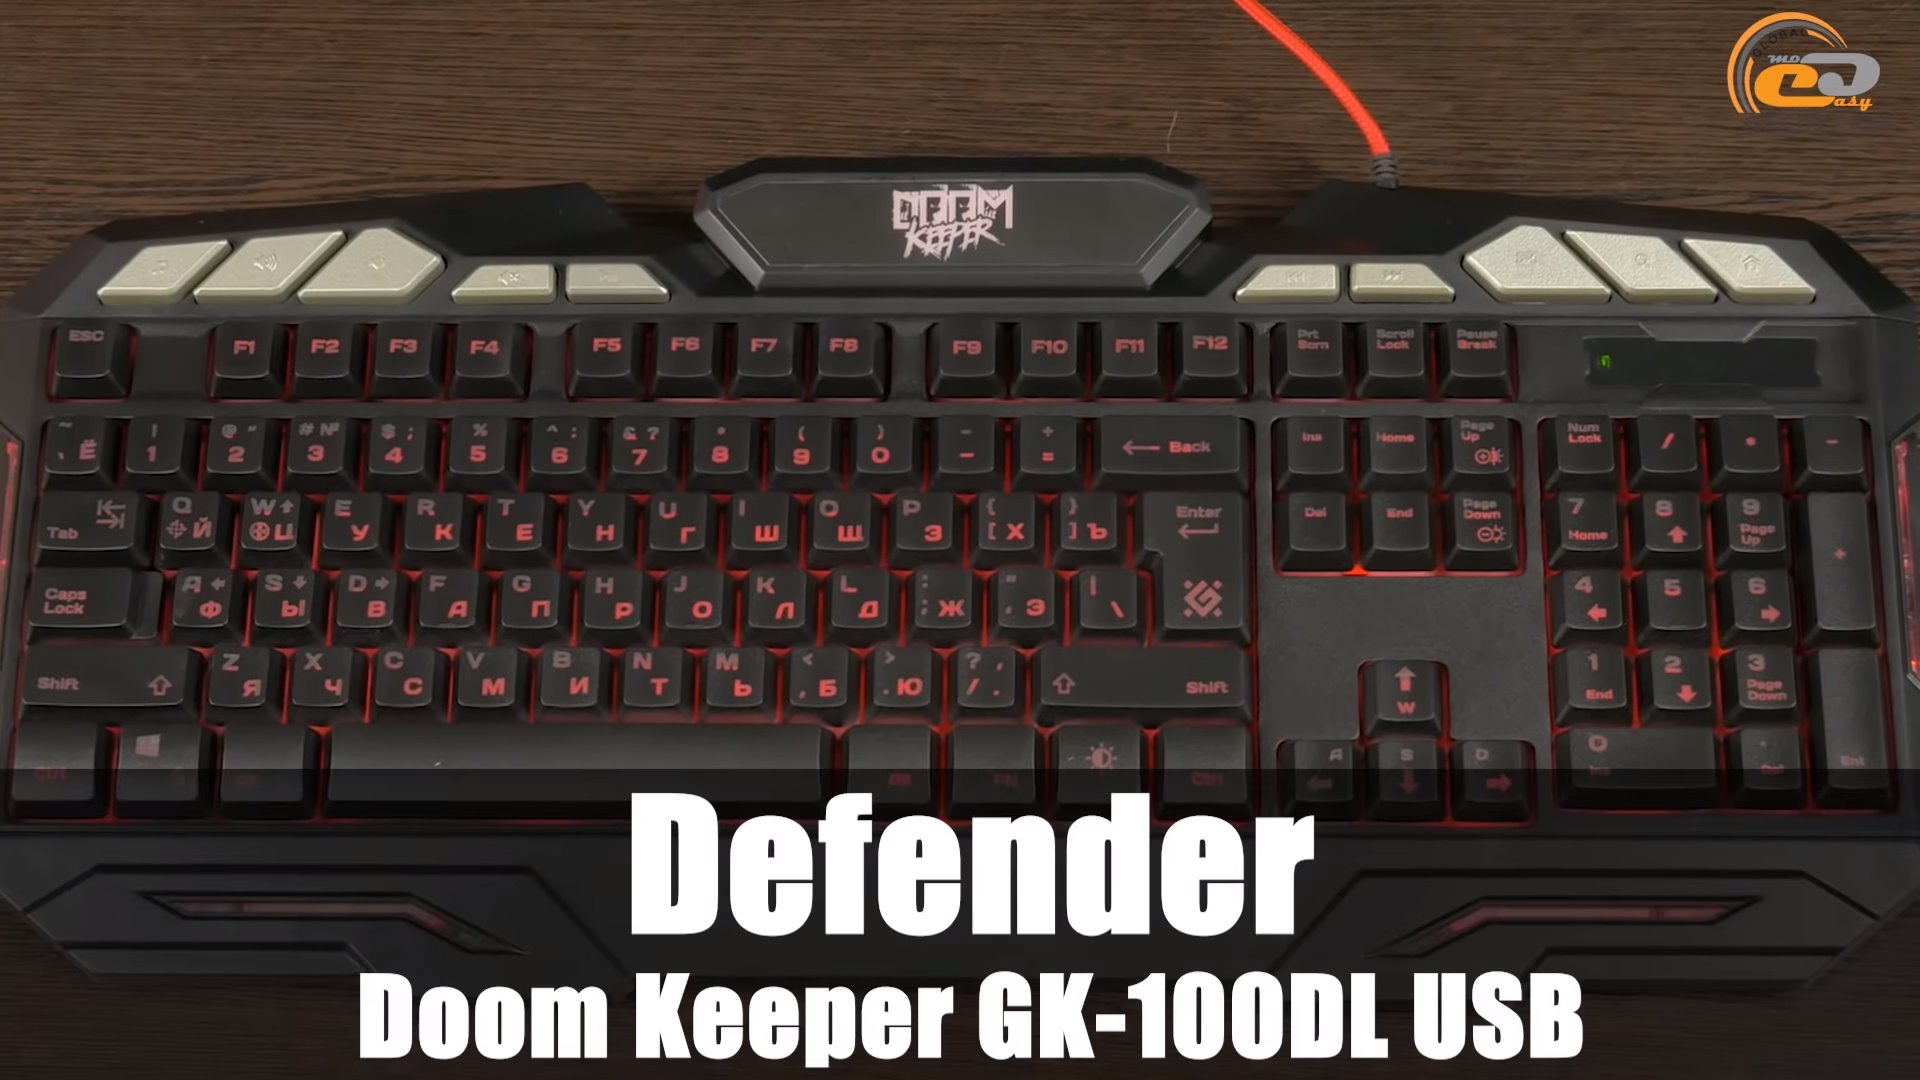 Defender doom keeper